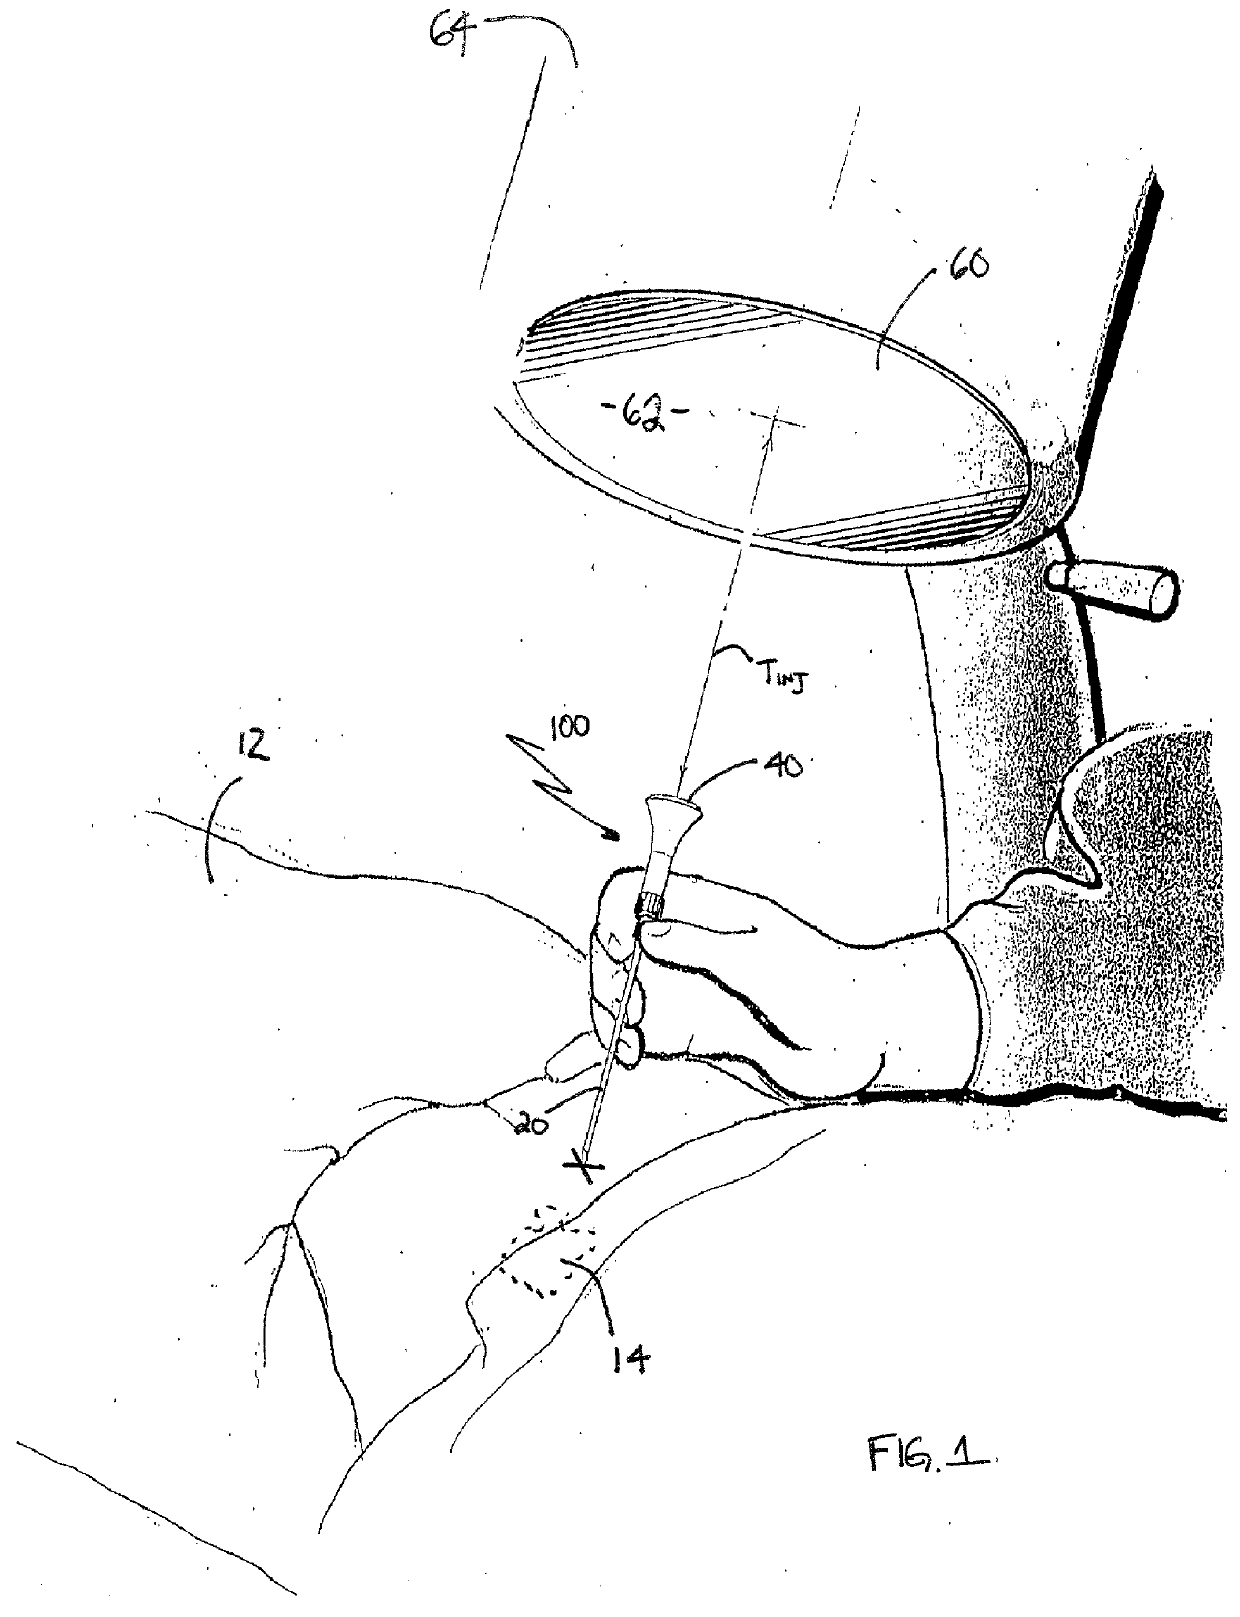 Percutaneous needle alignment system